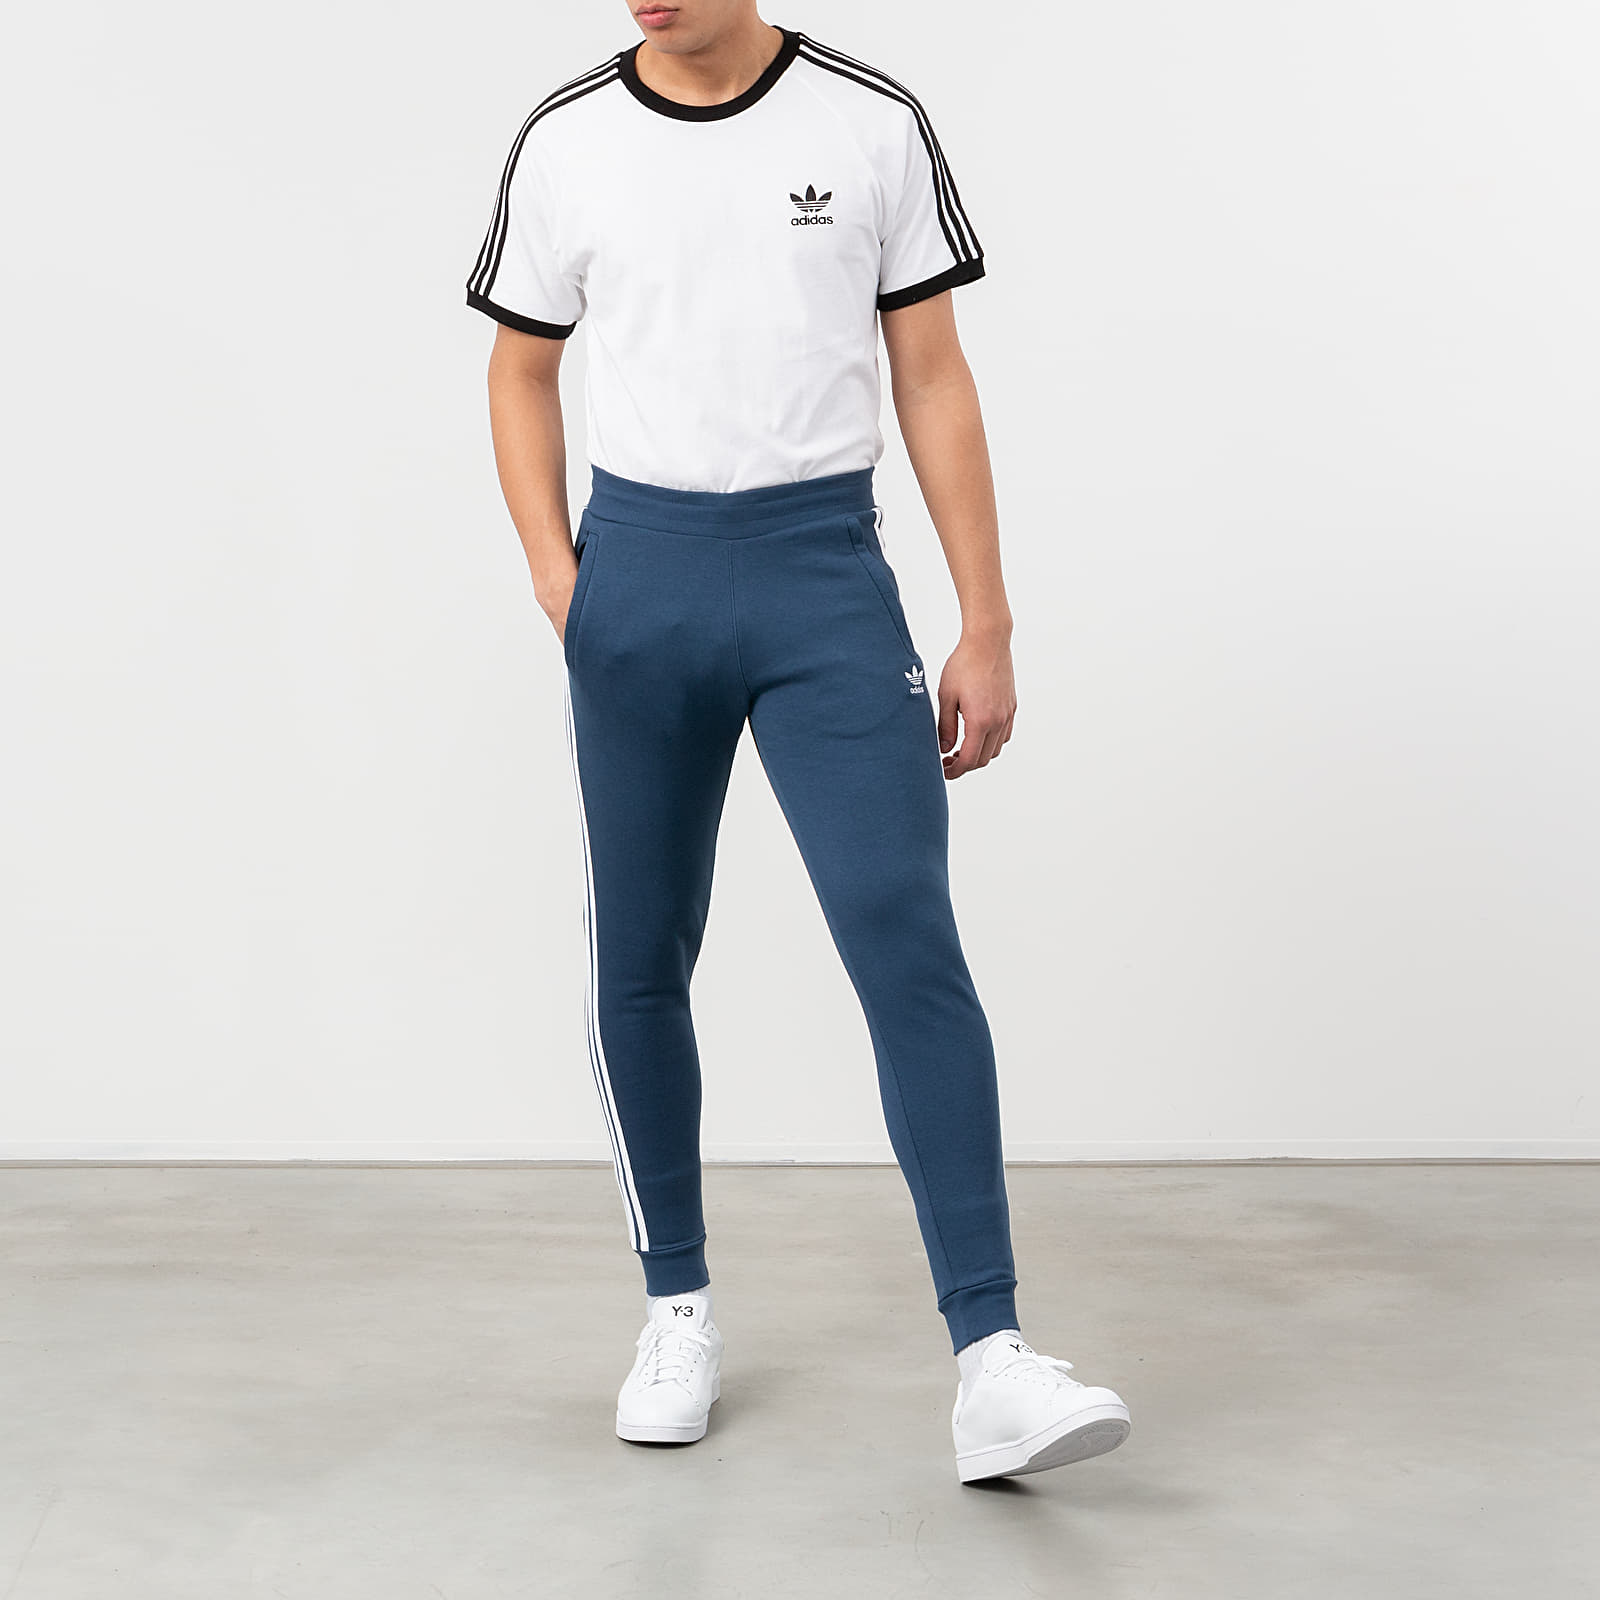 Junior Boys Adidas Track Pants 3 stripe Joggers Trouser GD2682 | eBay